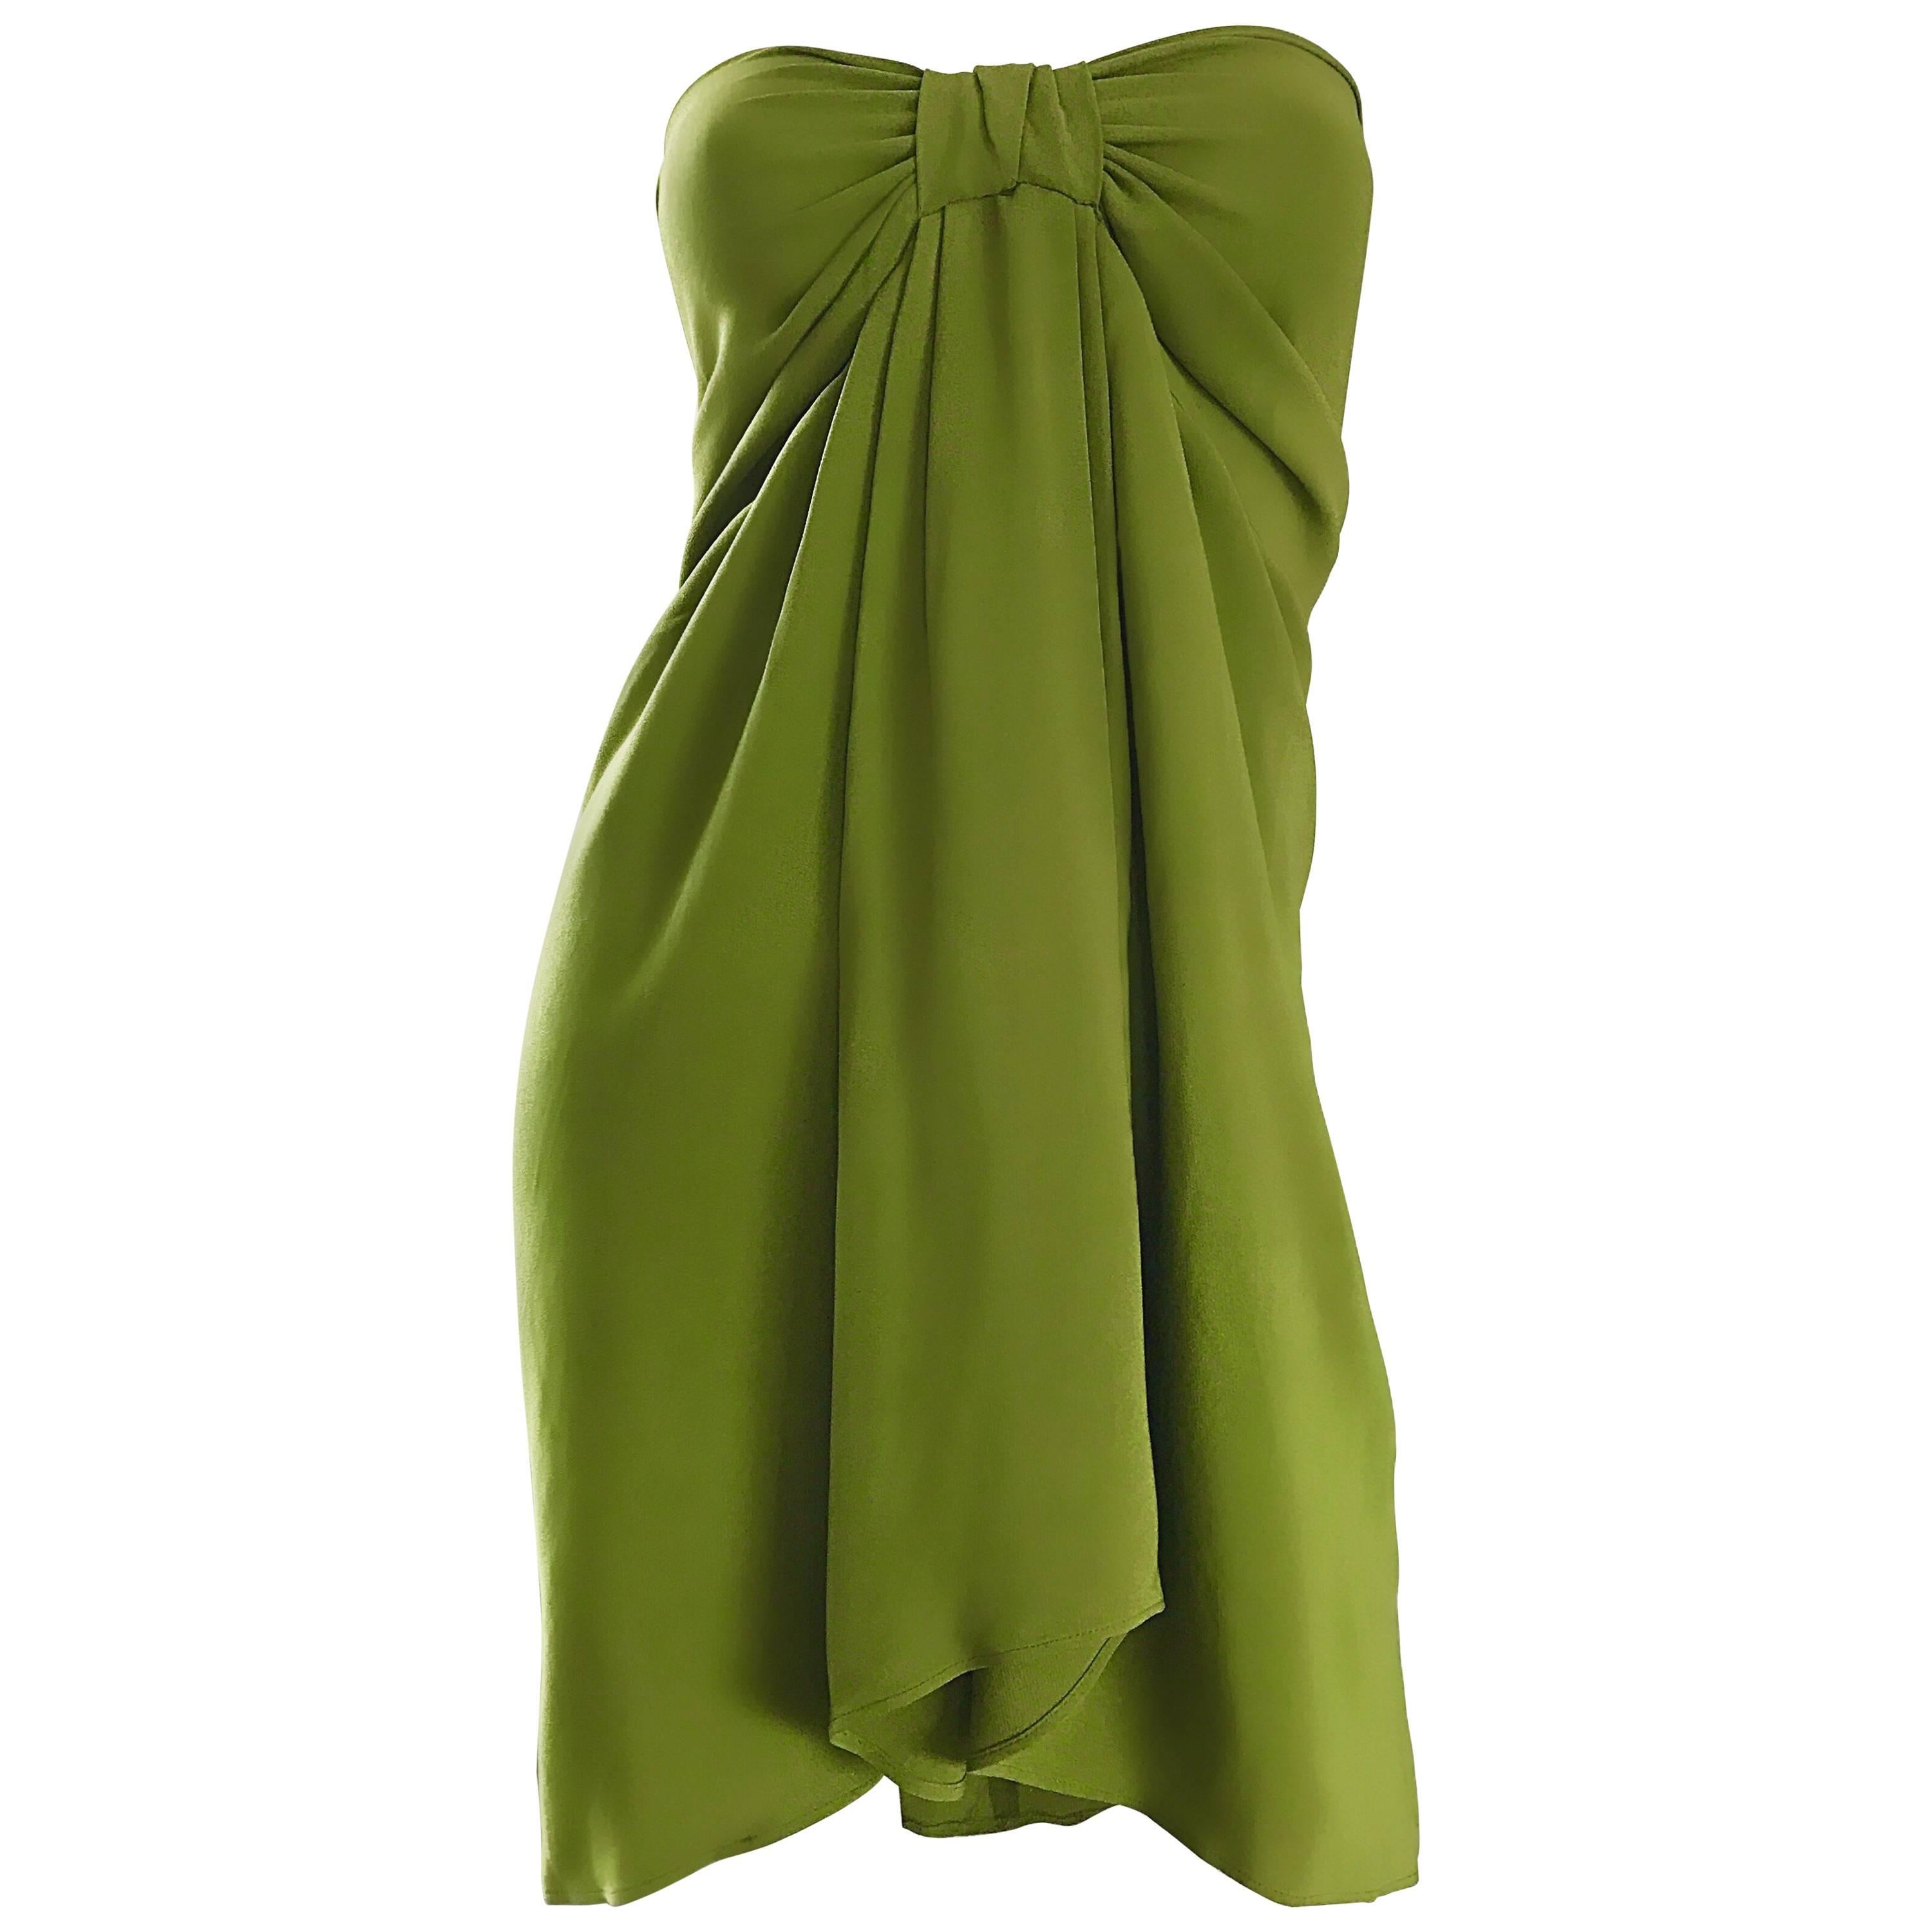 Christian Lacroix 1990s Chartreuse Green Strapless 90s Silk Empire Waist Dress